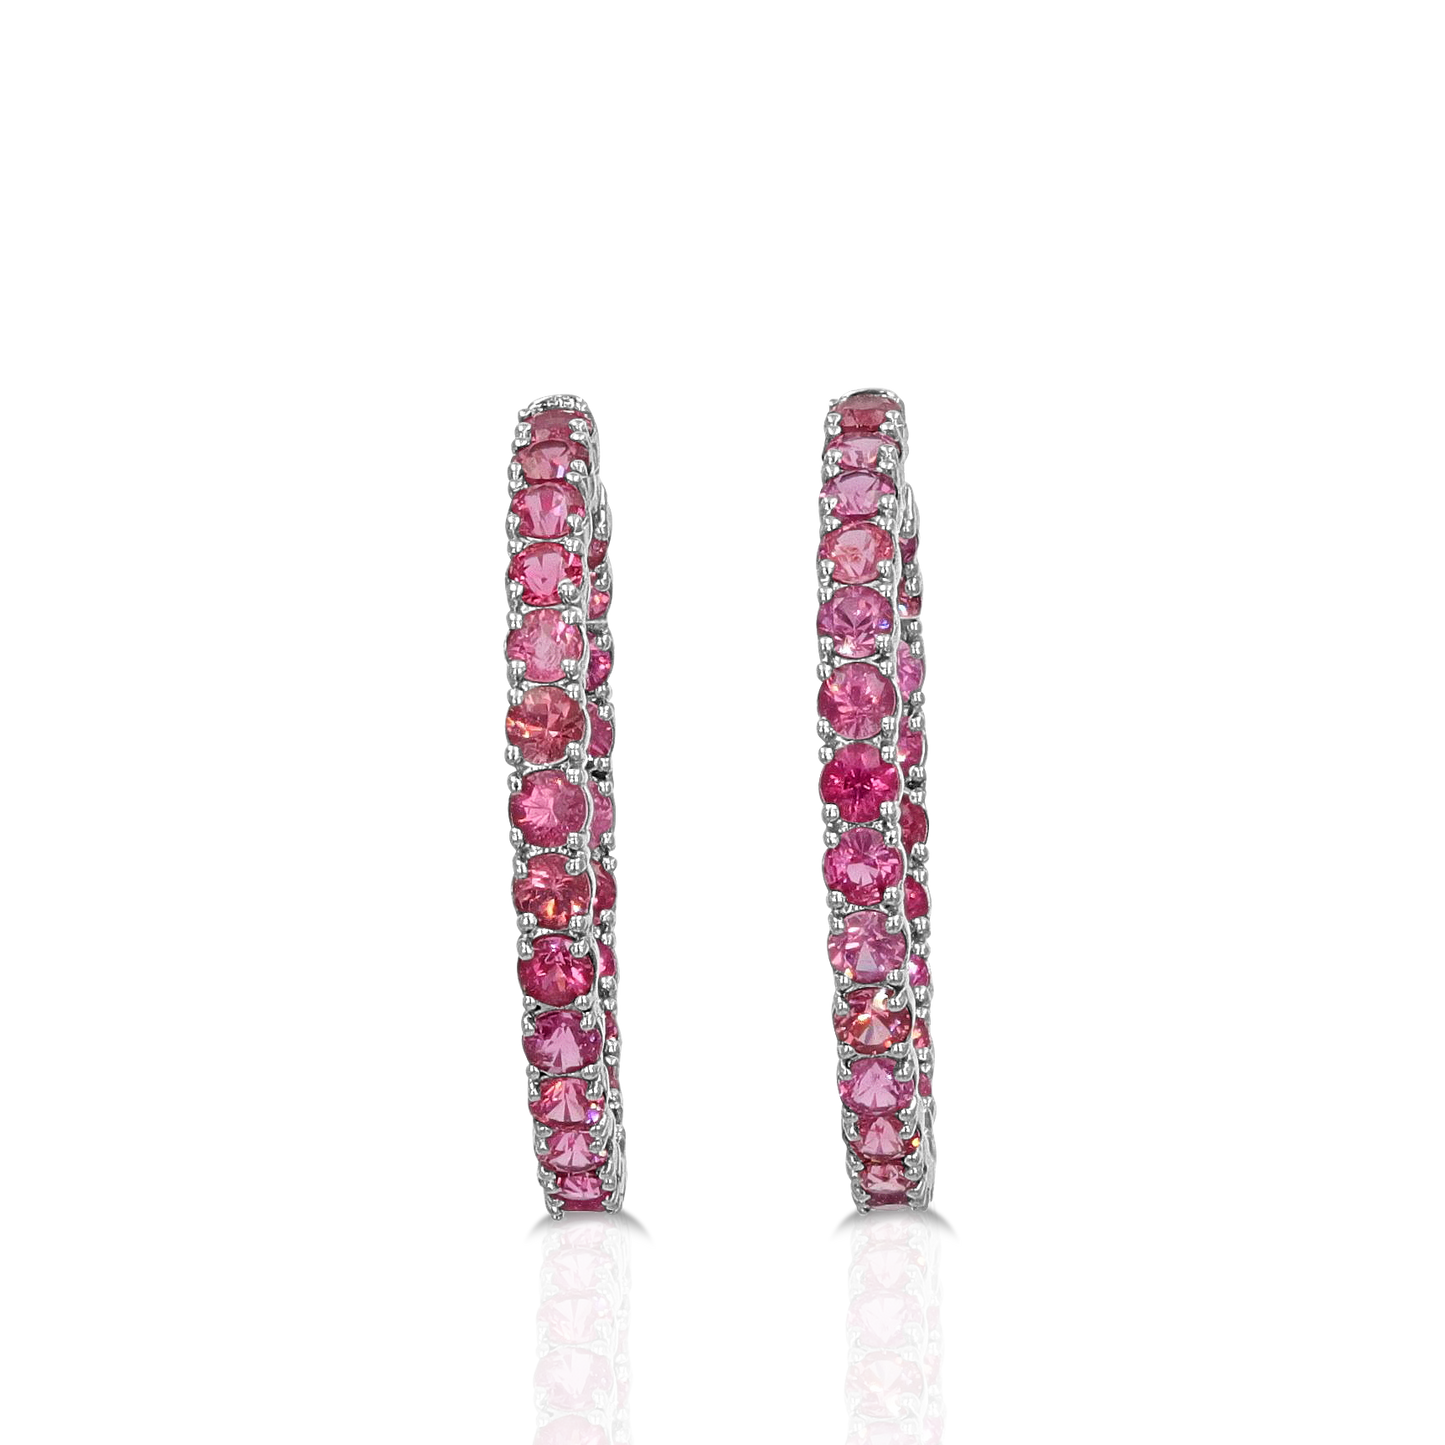 Rare Tanzanian Hot Pink Spinel Hoop Earrings - 11.95 ctw